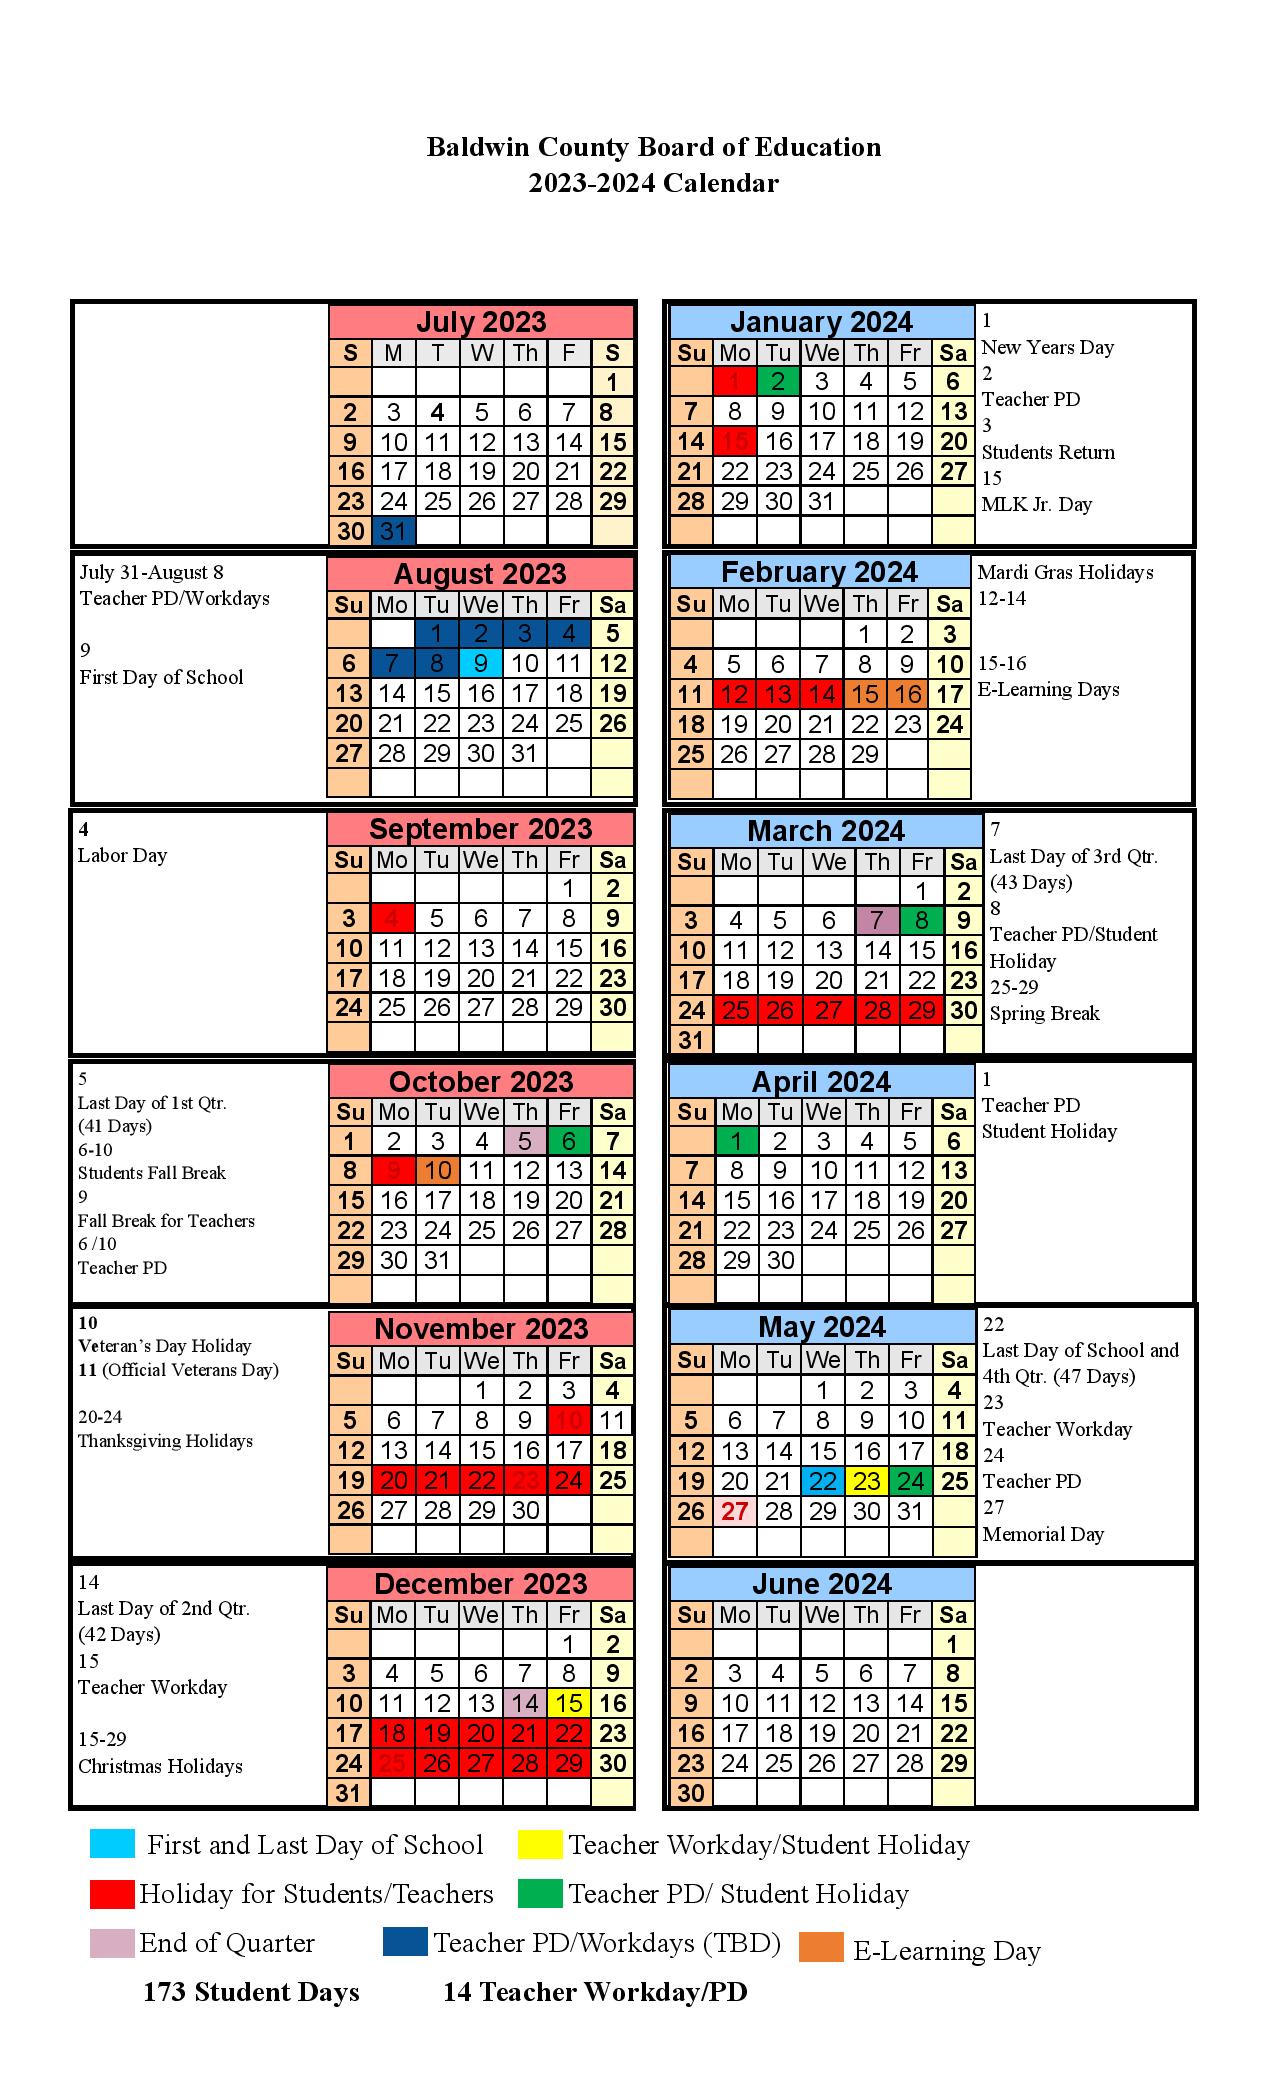 Baldwin County Public Schools Calendar 2023 2024 In PDF School Calendar Info